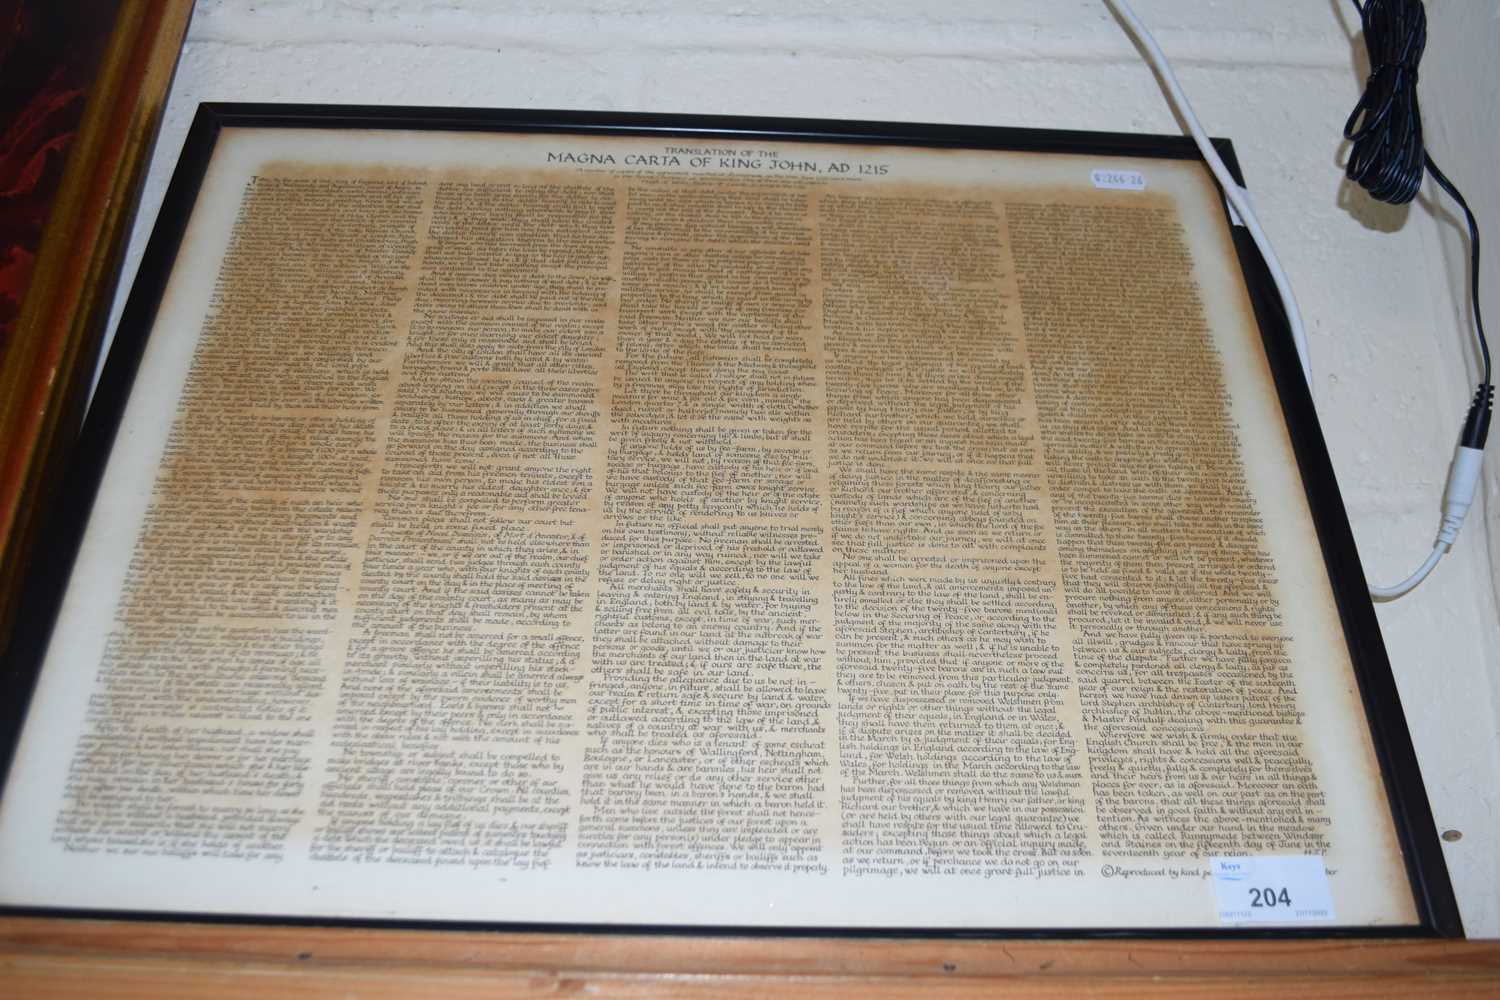 Coloured print, translation of the Magna Carta